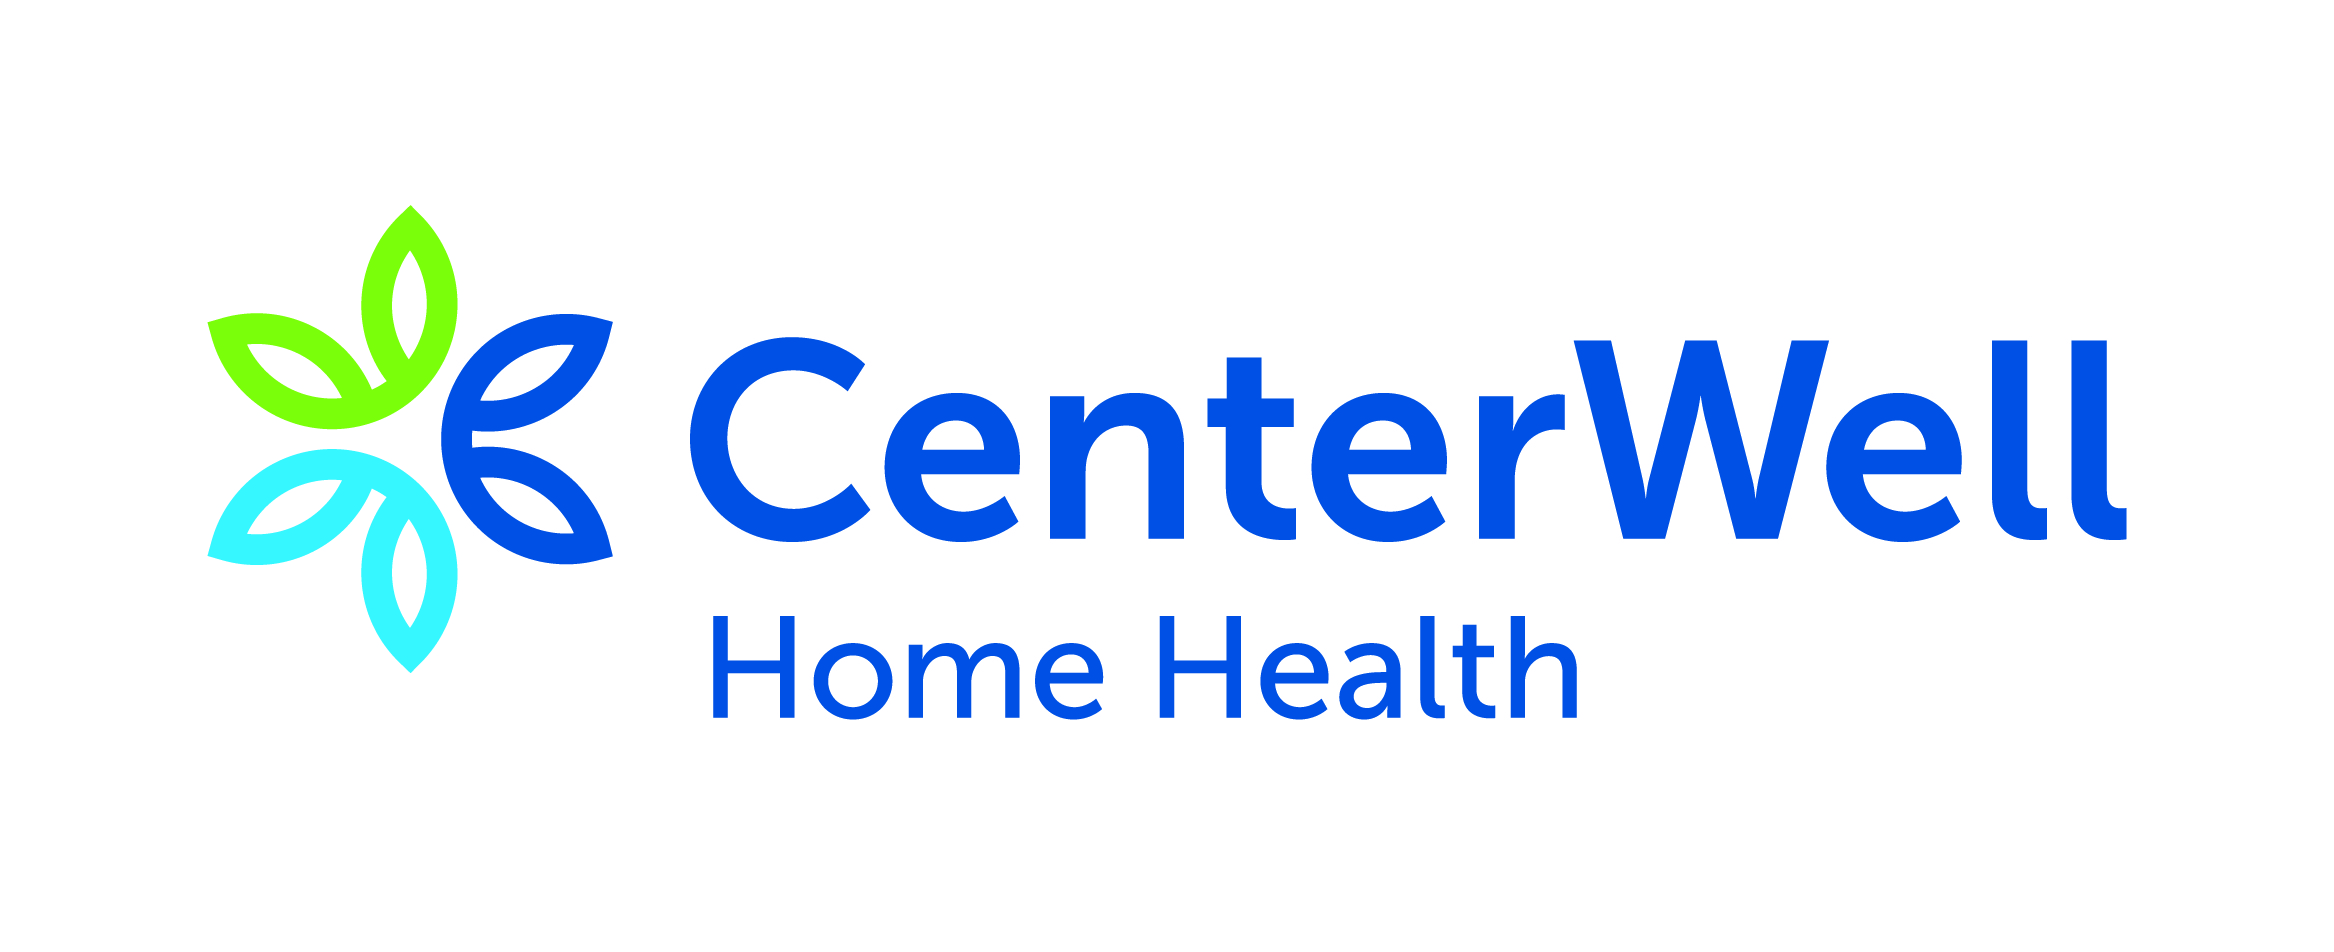 A2 CenterWell Home Health (Línea de meta)